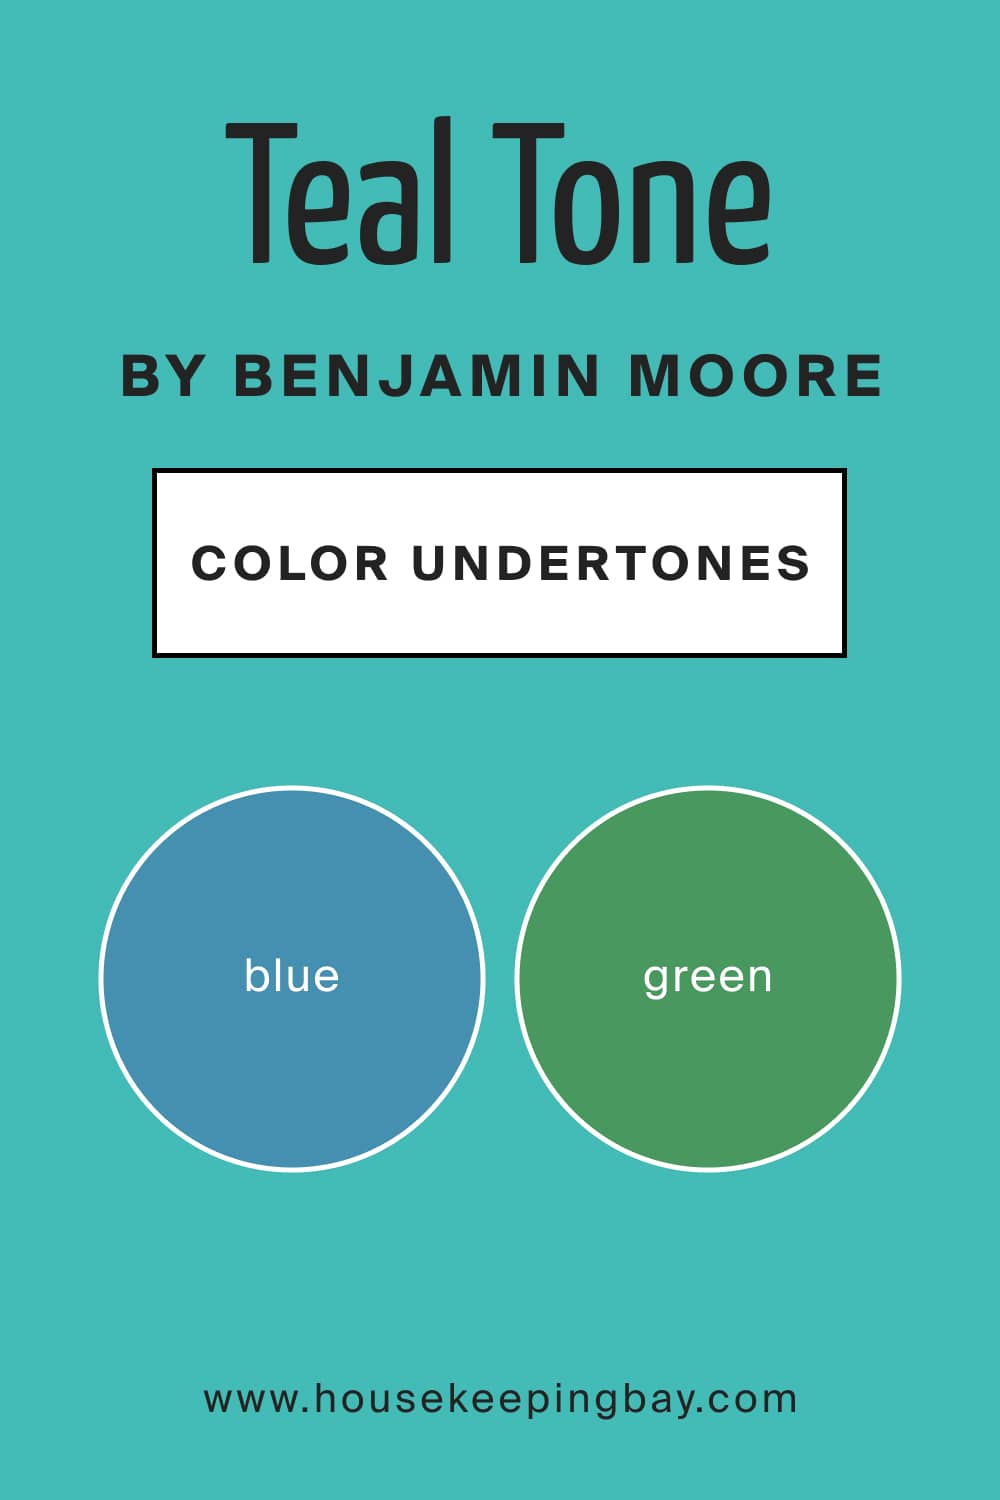 BM Teal Tone 663 by Benjamin Moore. Main Undertone